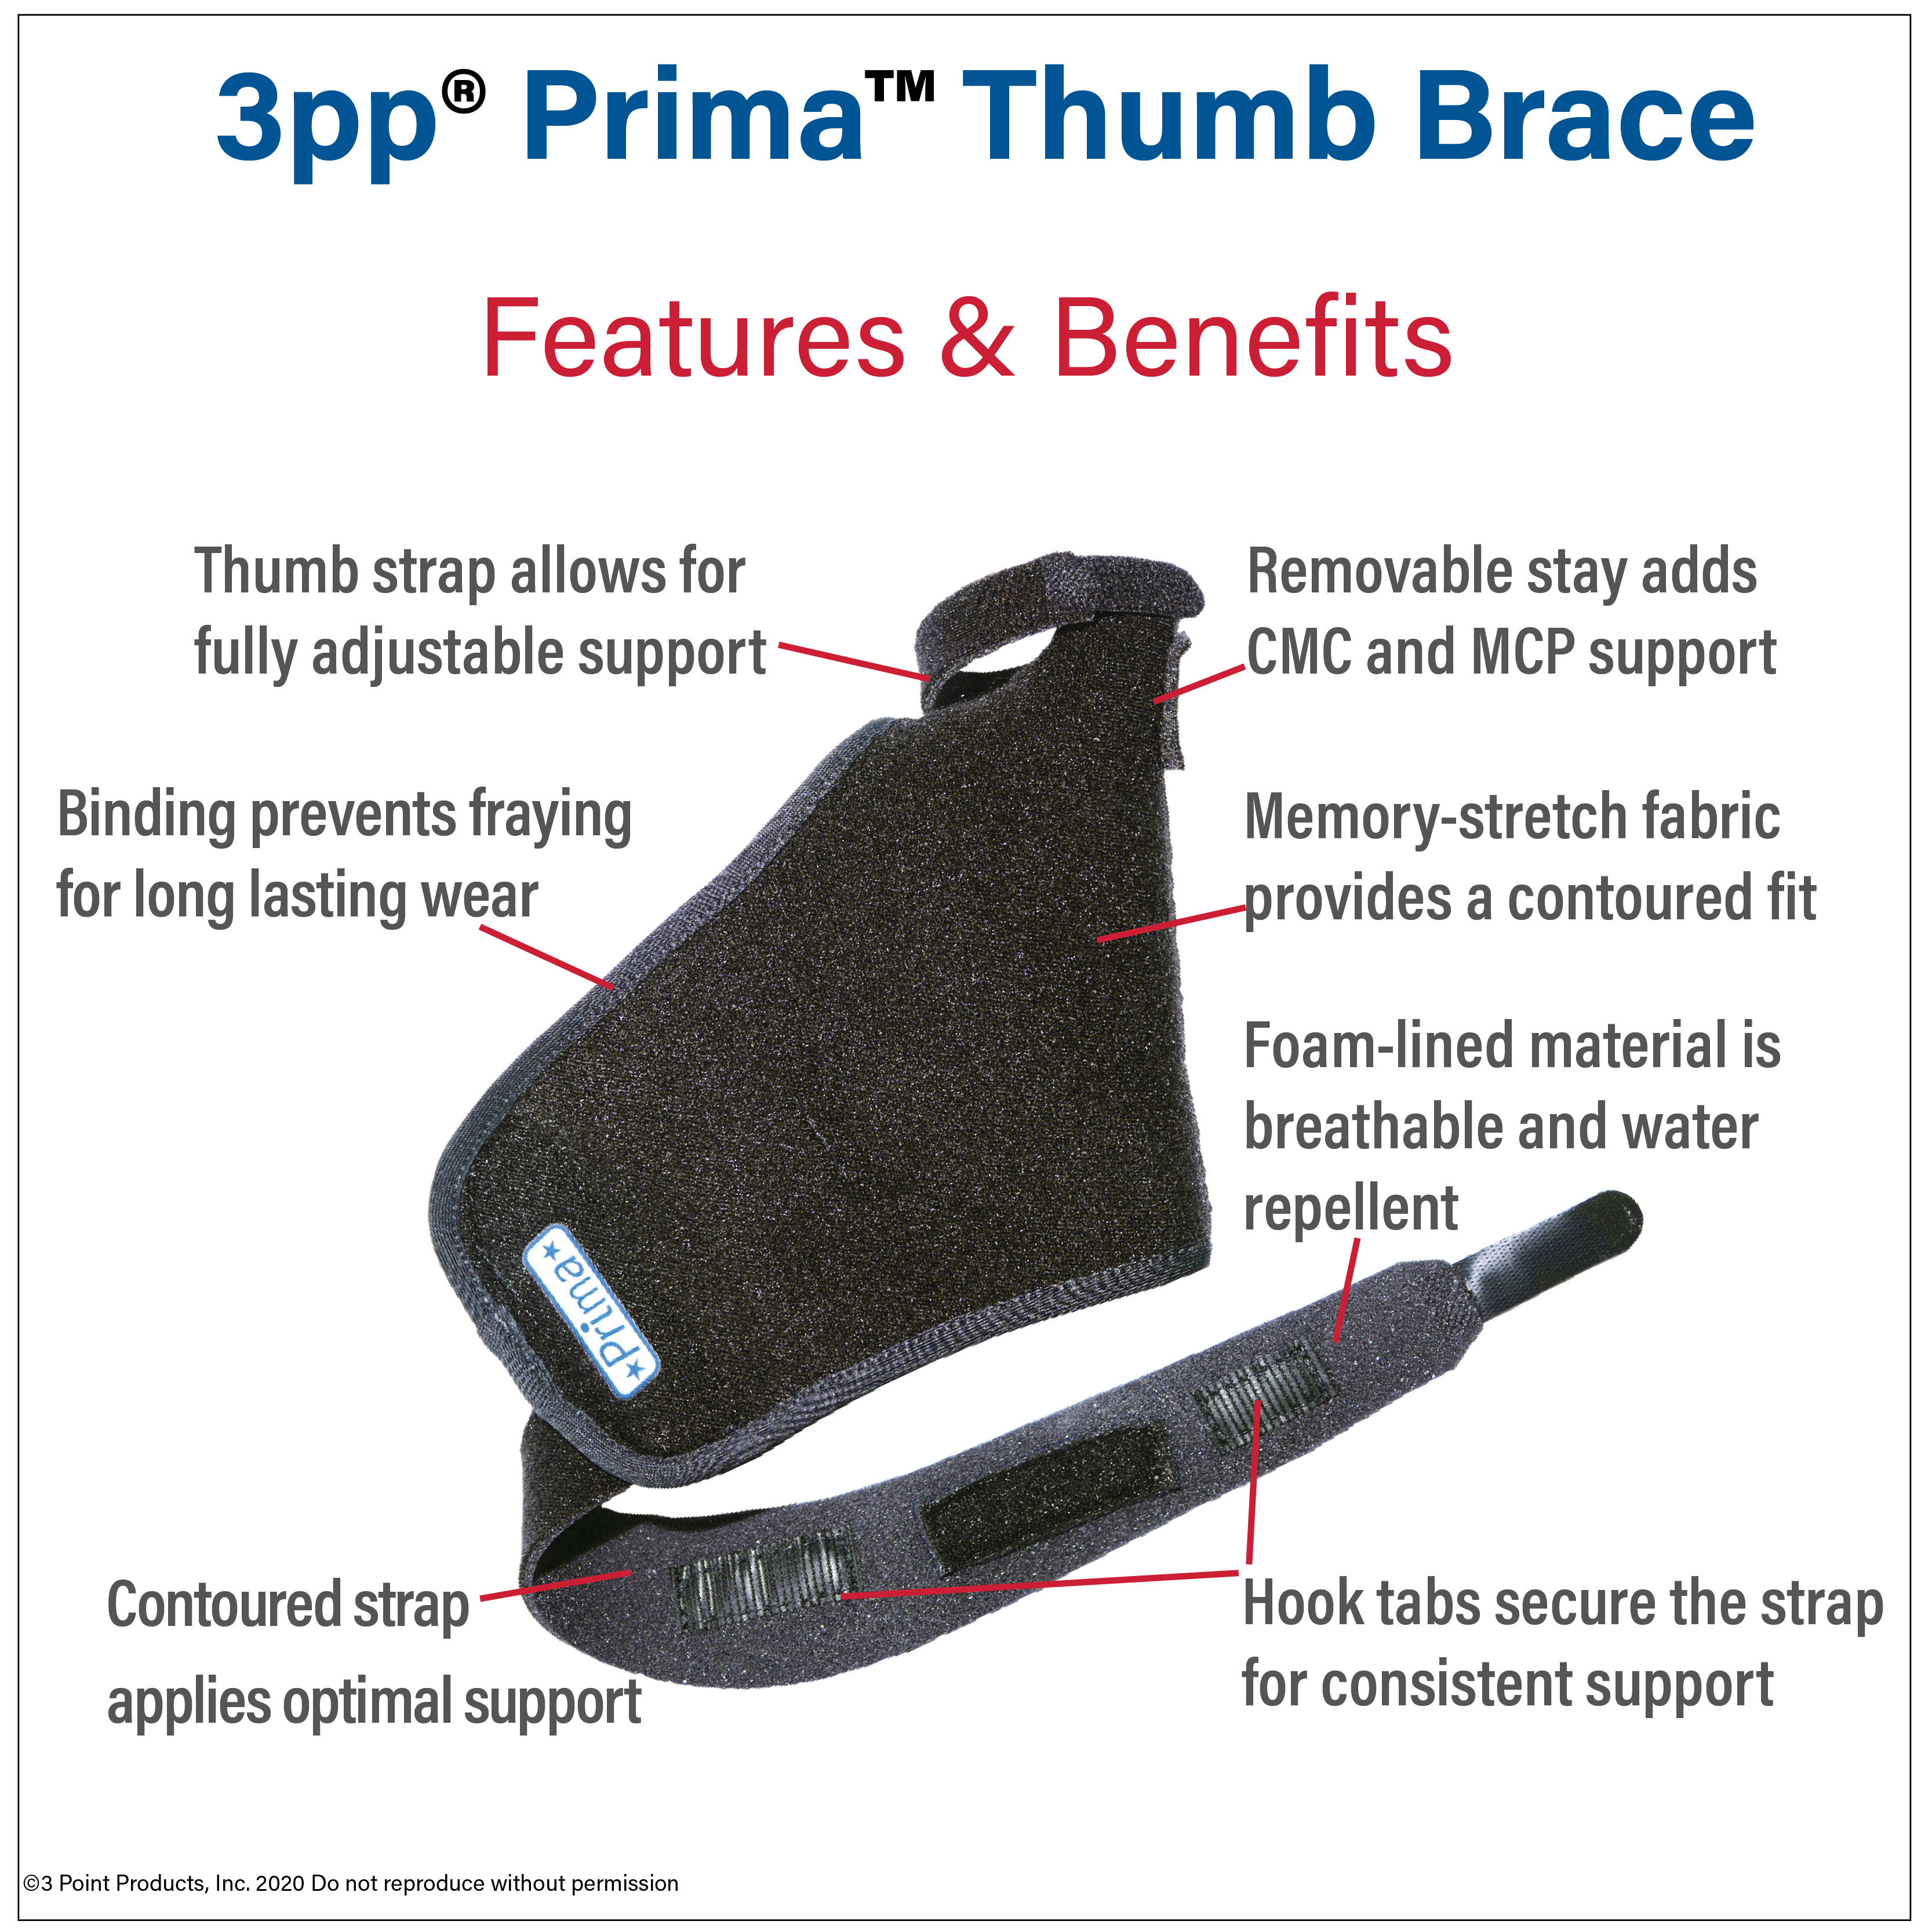 3pp Prima Thumb Brace Features & Benefits